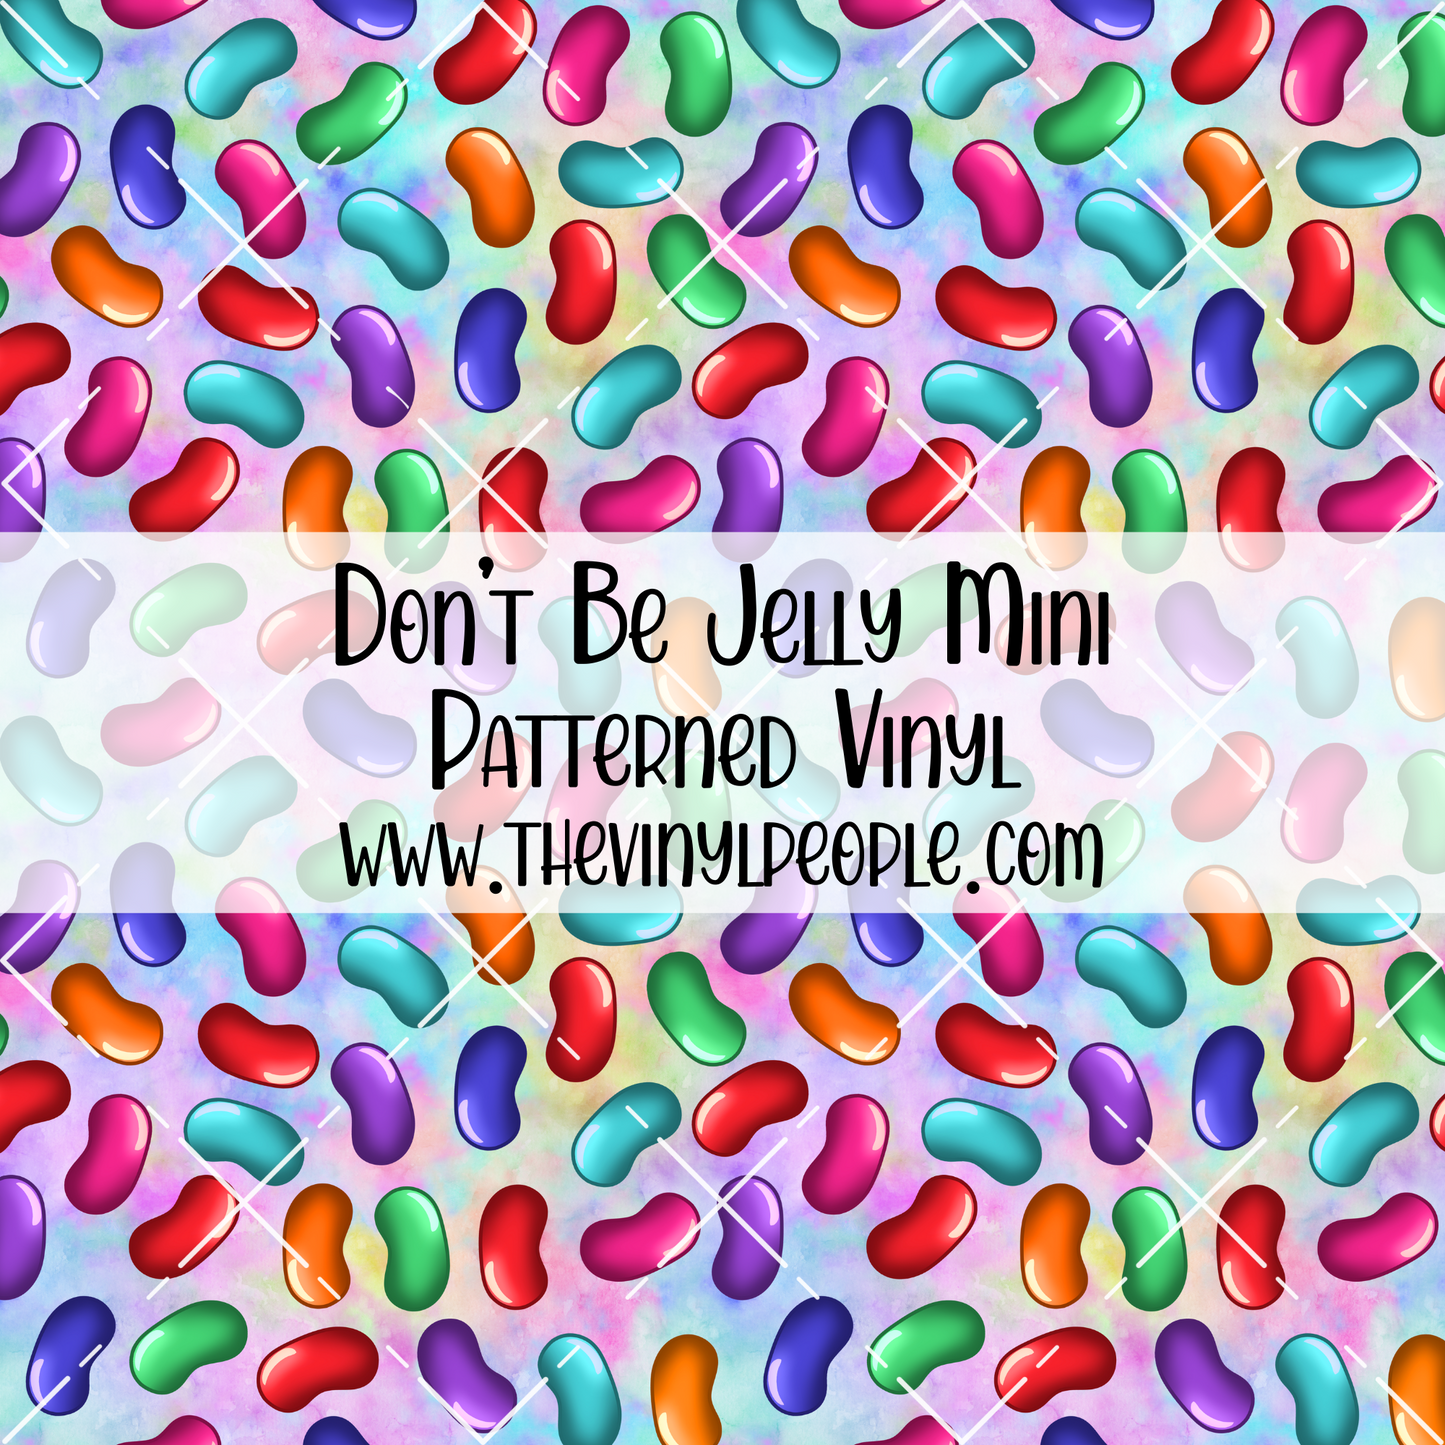 Don't Be Jelly Patterned Vinyl